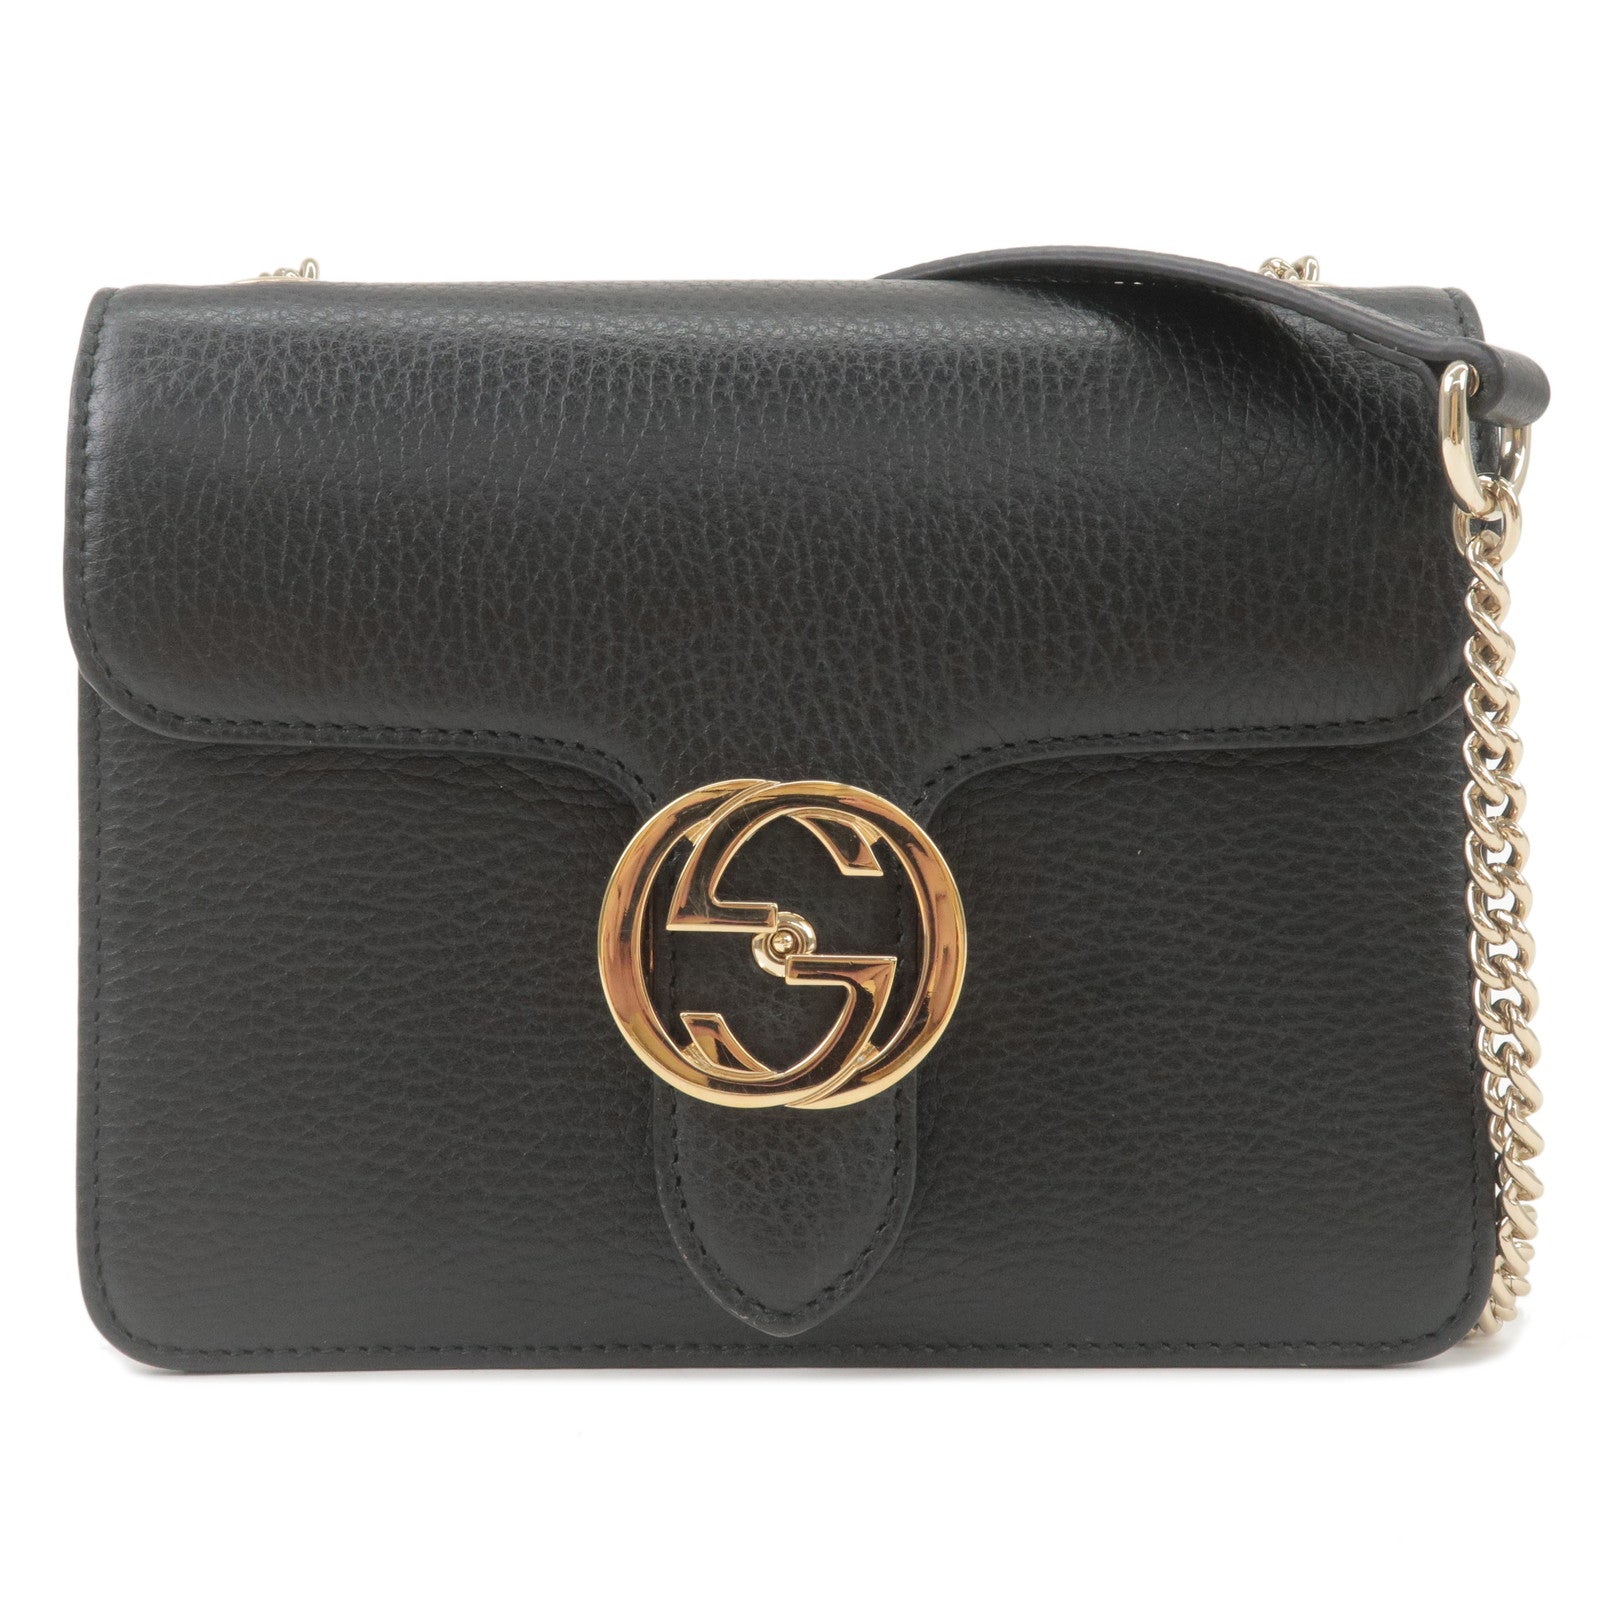 Gucci Small Interlocking G Shoulder Bag